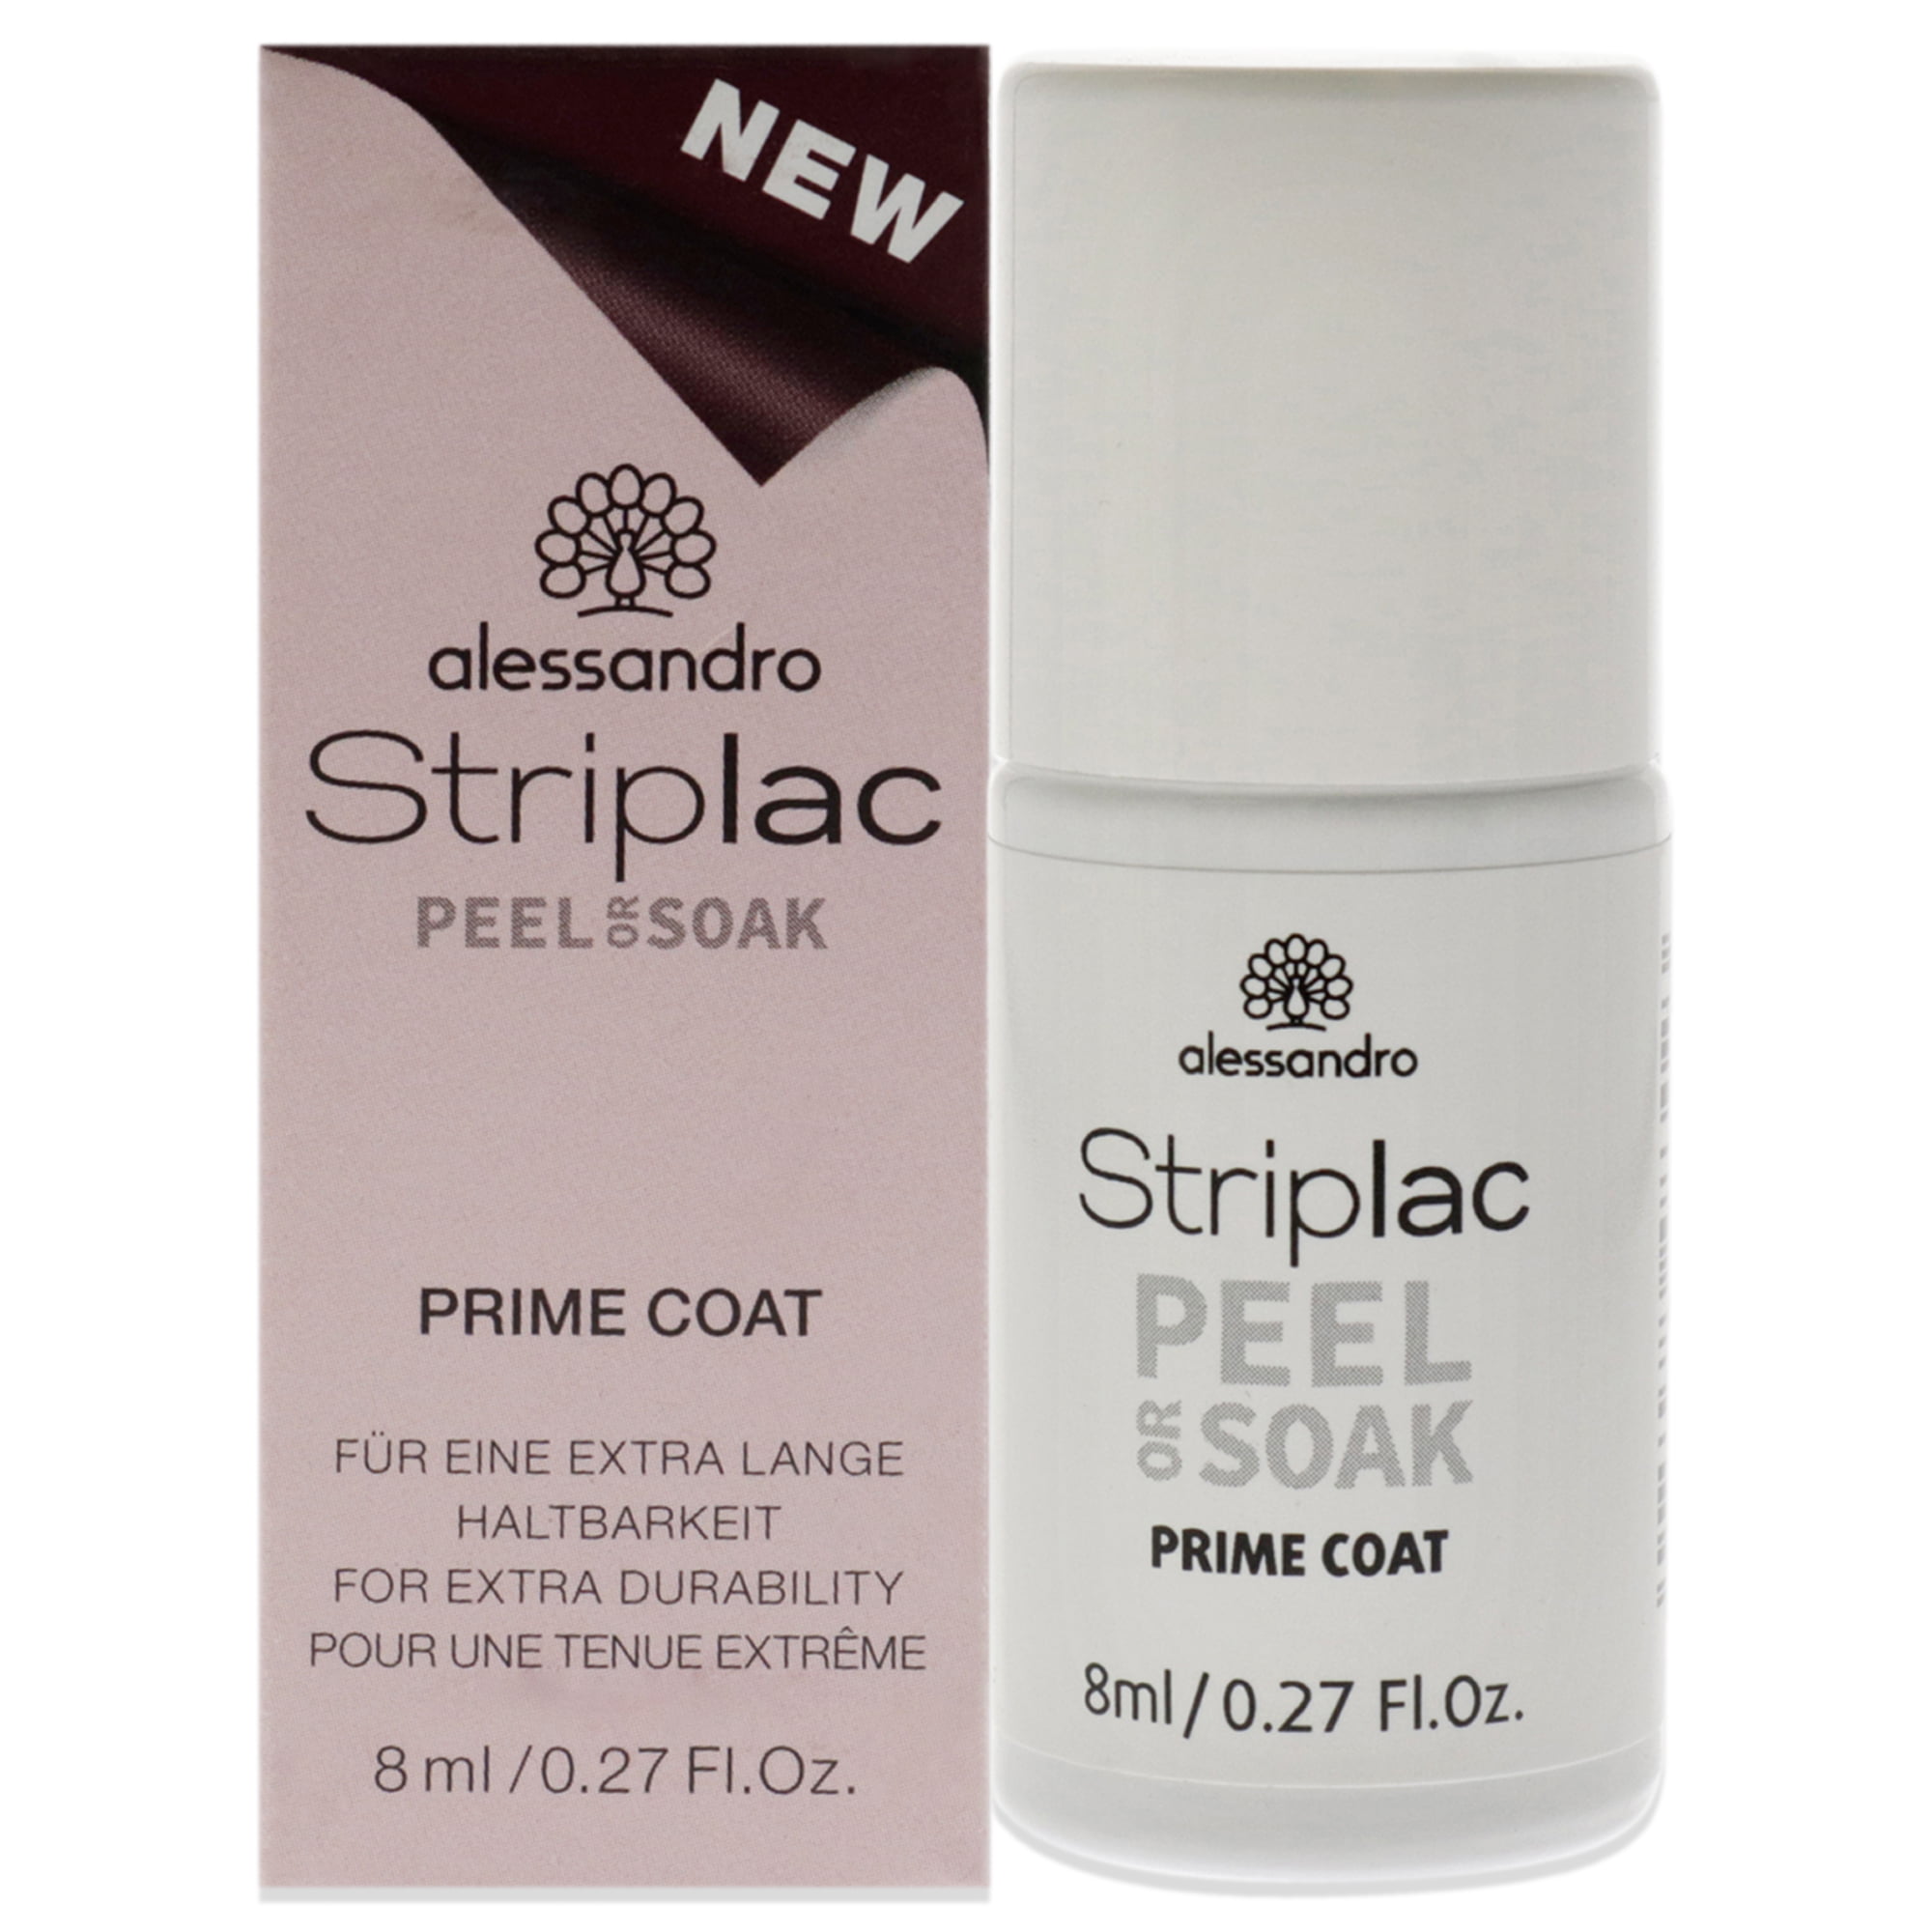 Striplac oz Nail Polish 0.27 Coat, Soak Alessandro or Primer Peel -